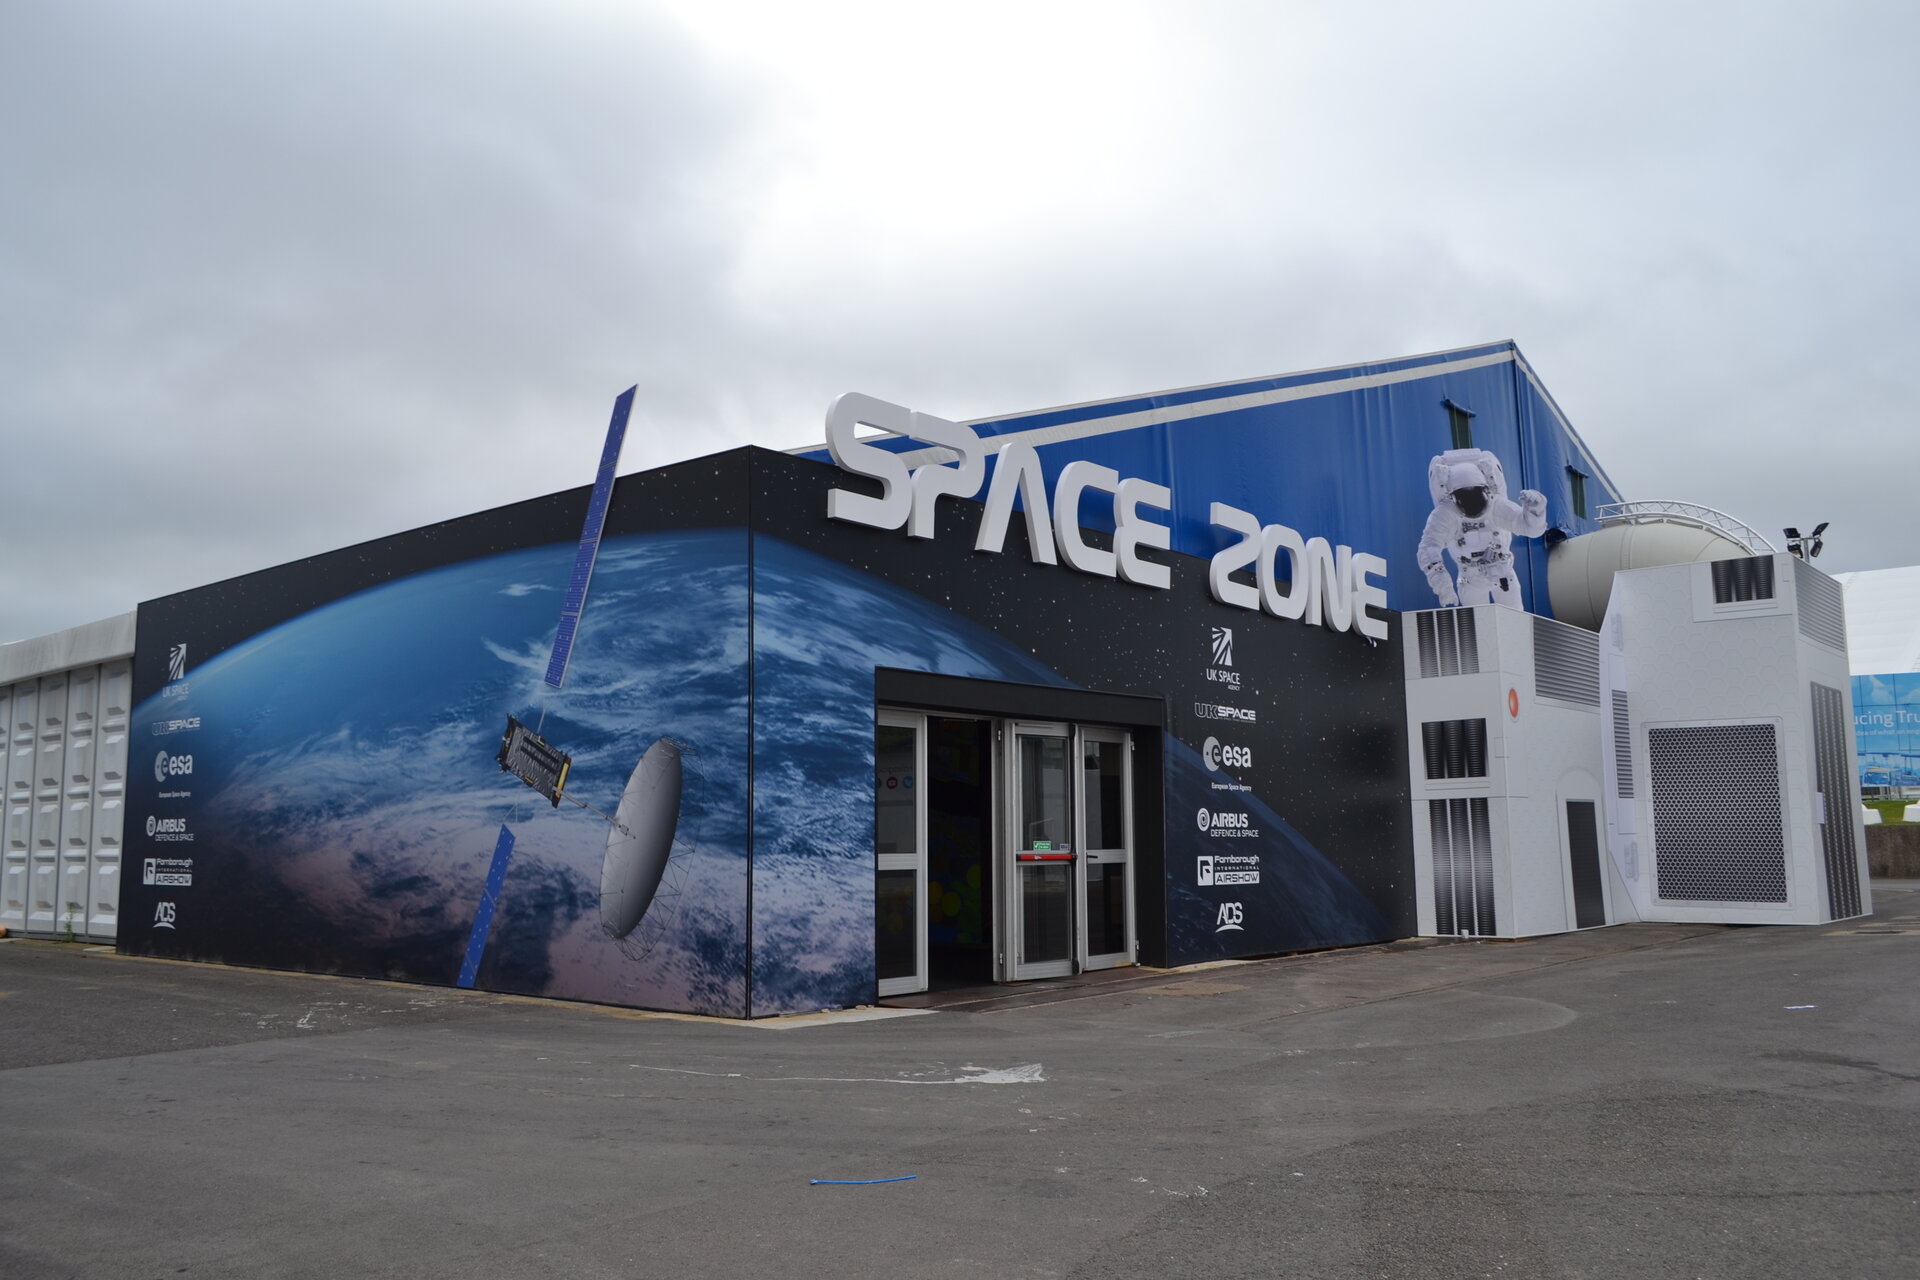 The Space Zone at Farnborough 2016